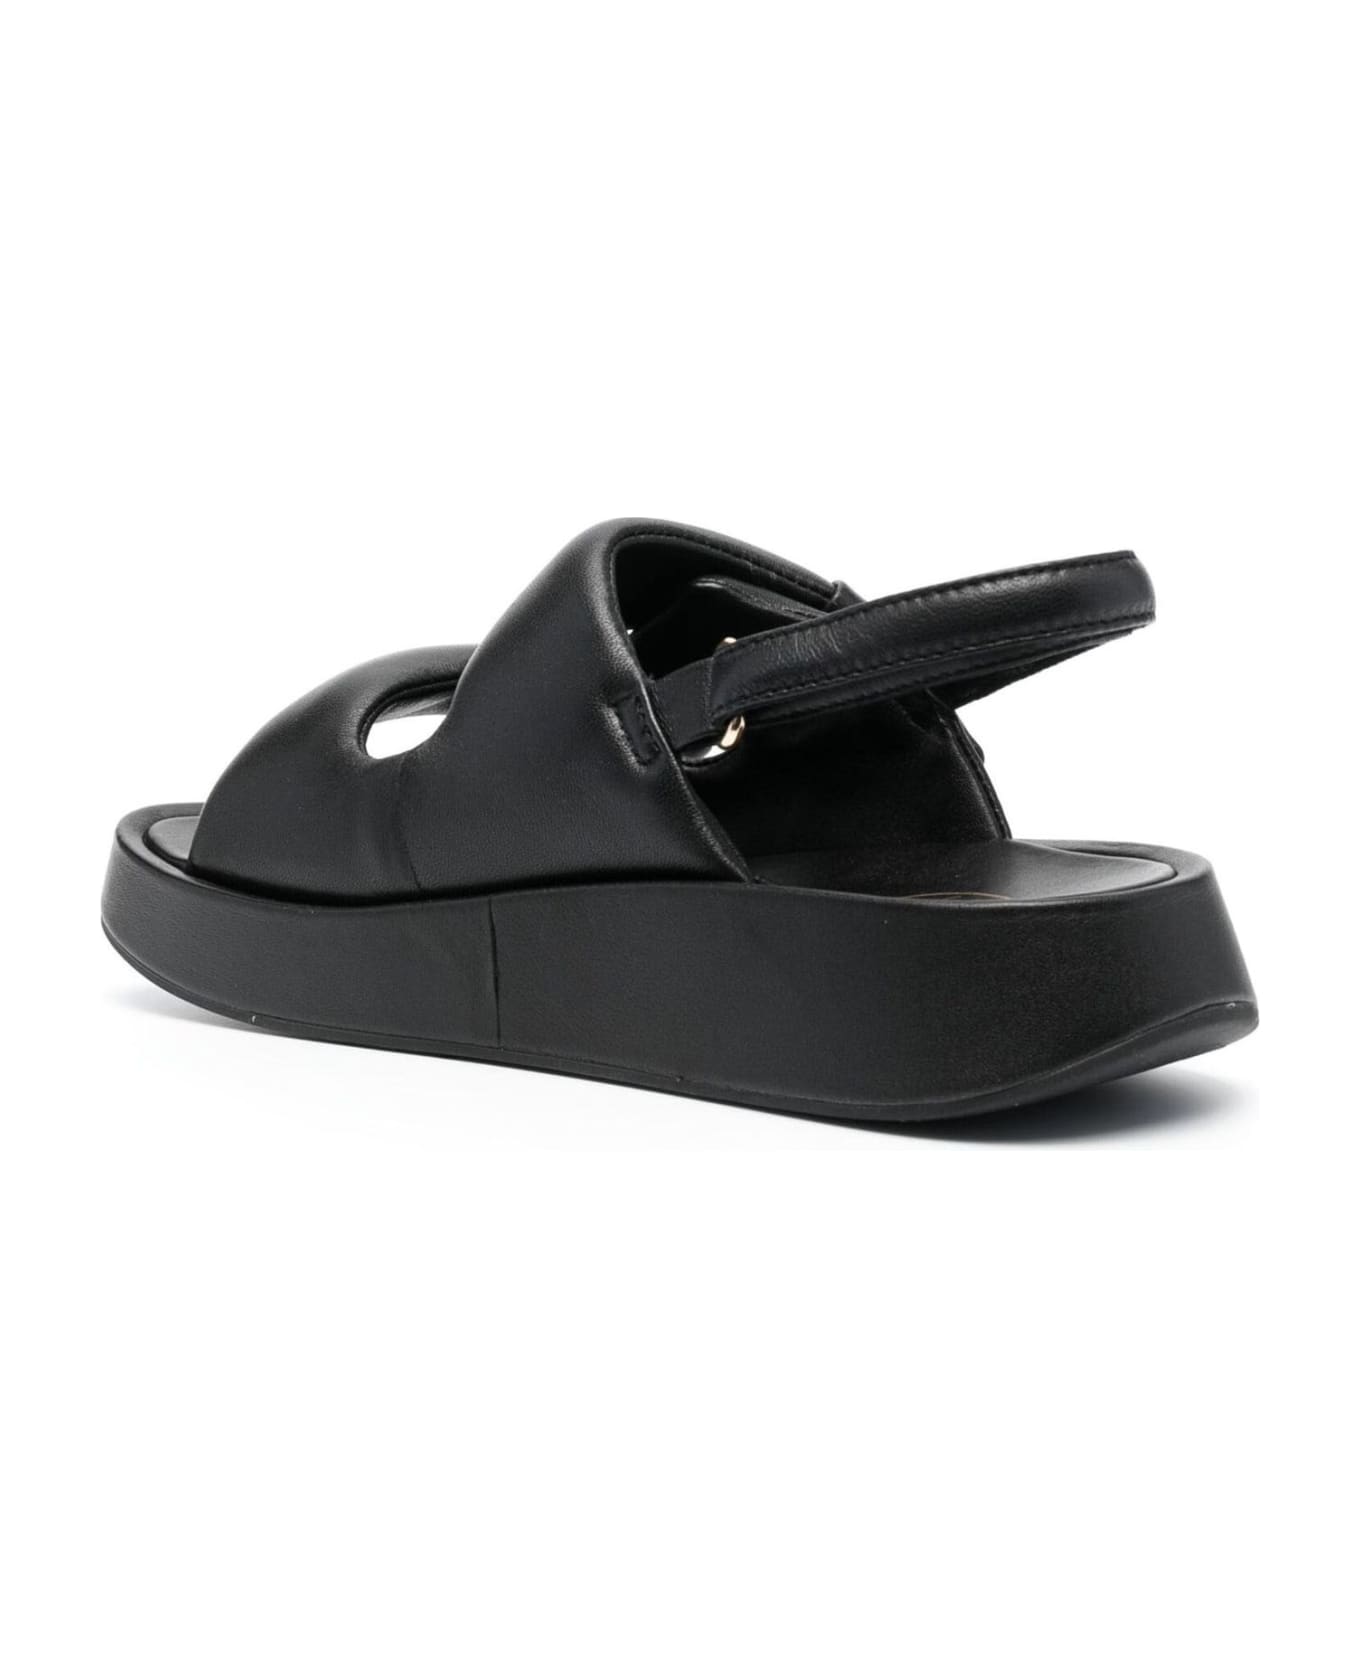 Ash Black Calf Leather Vinci Sandals - Black